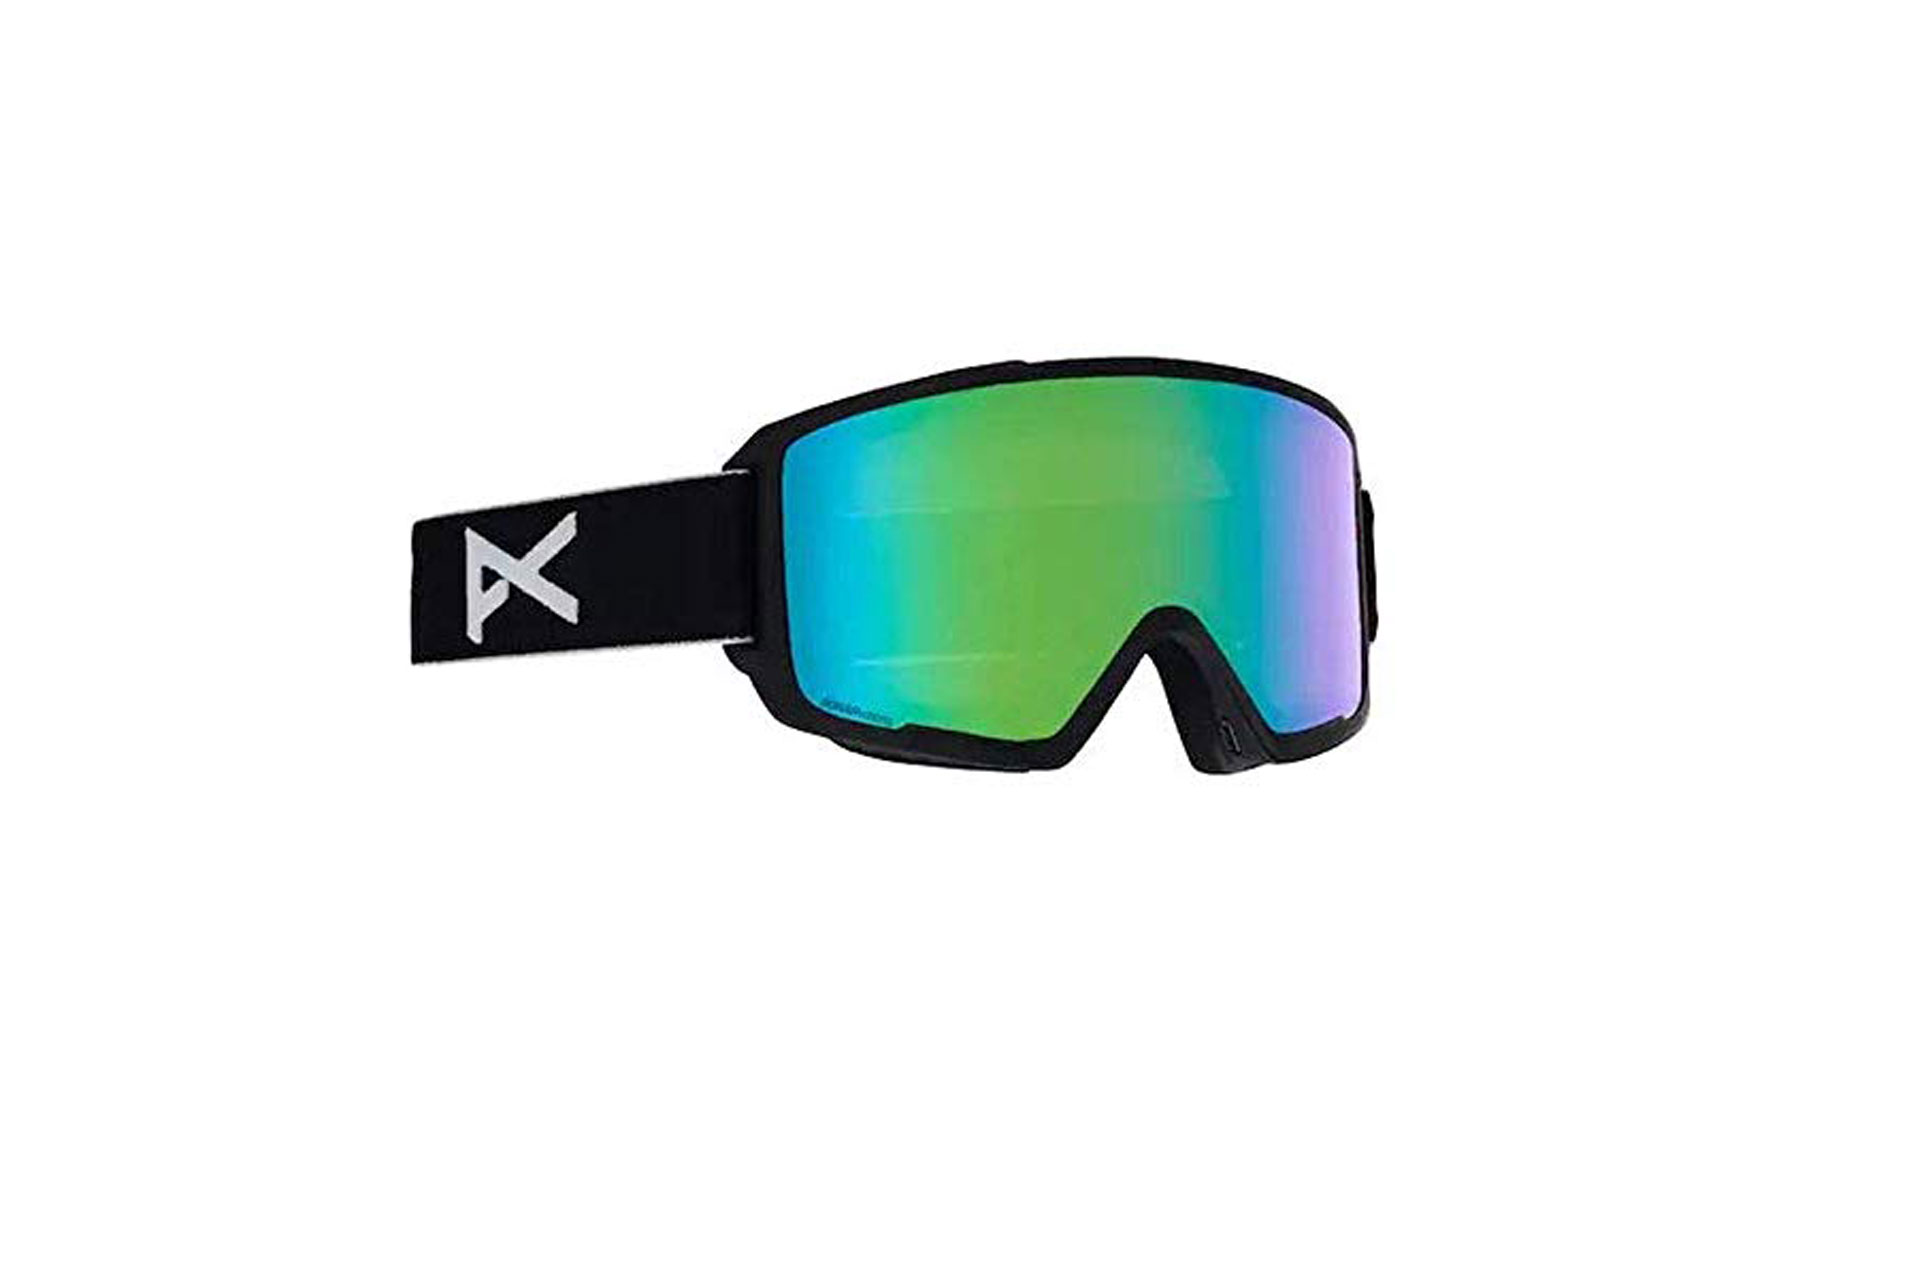 Ski Goggles; Courtesy of Amazon